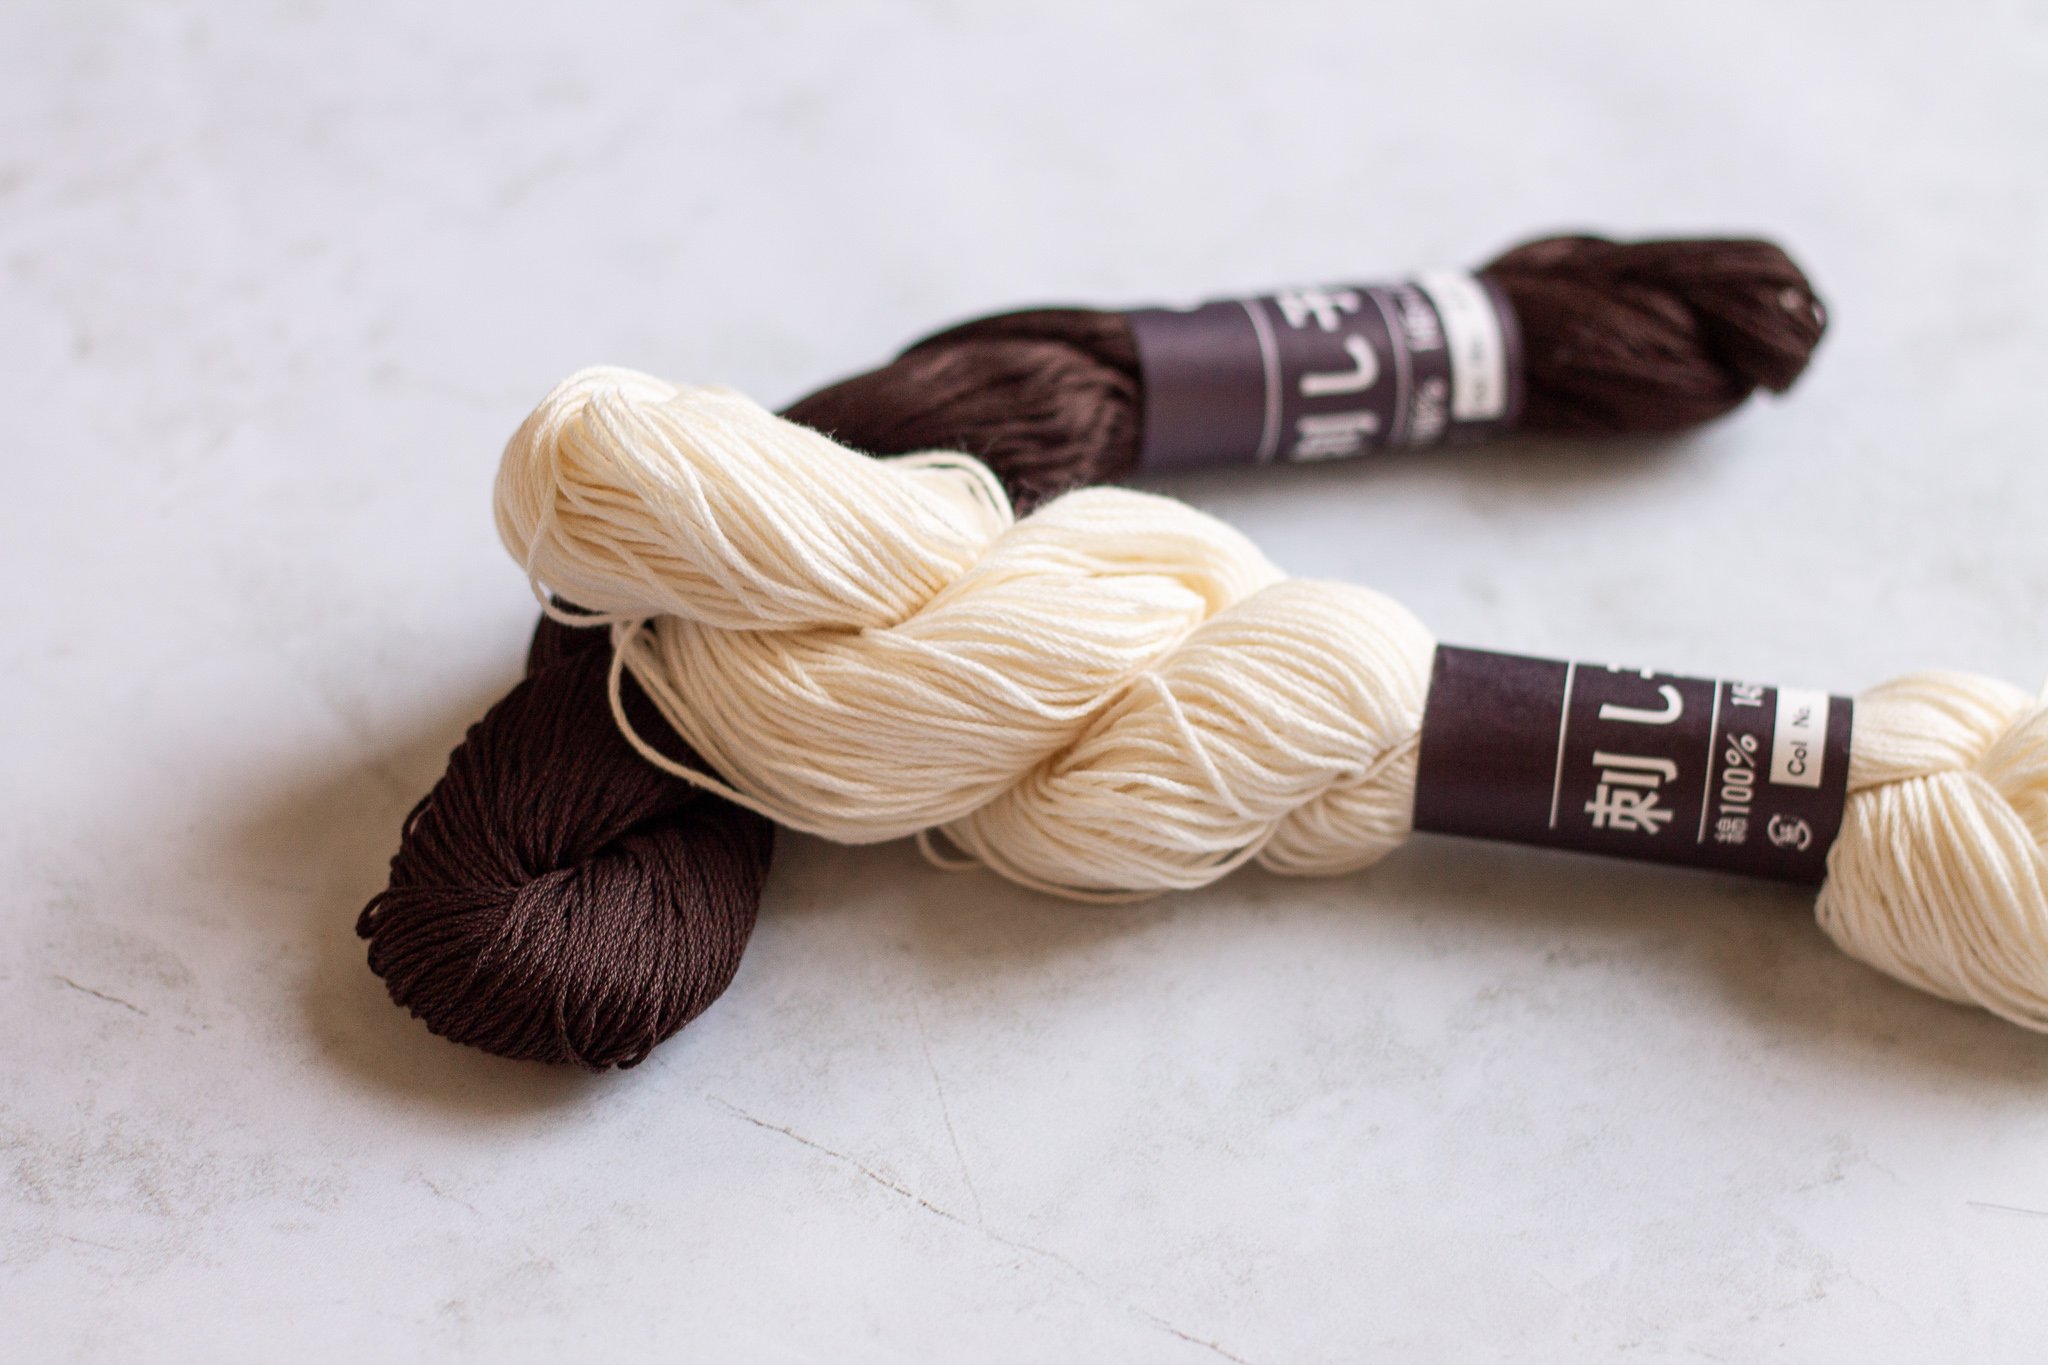 Sashiko Thread: Large Skeins (2 colors)